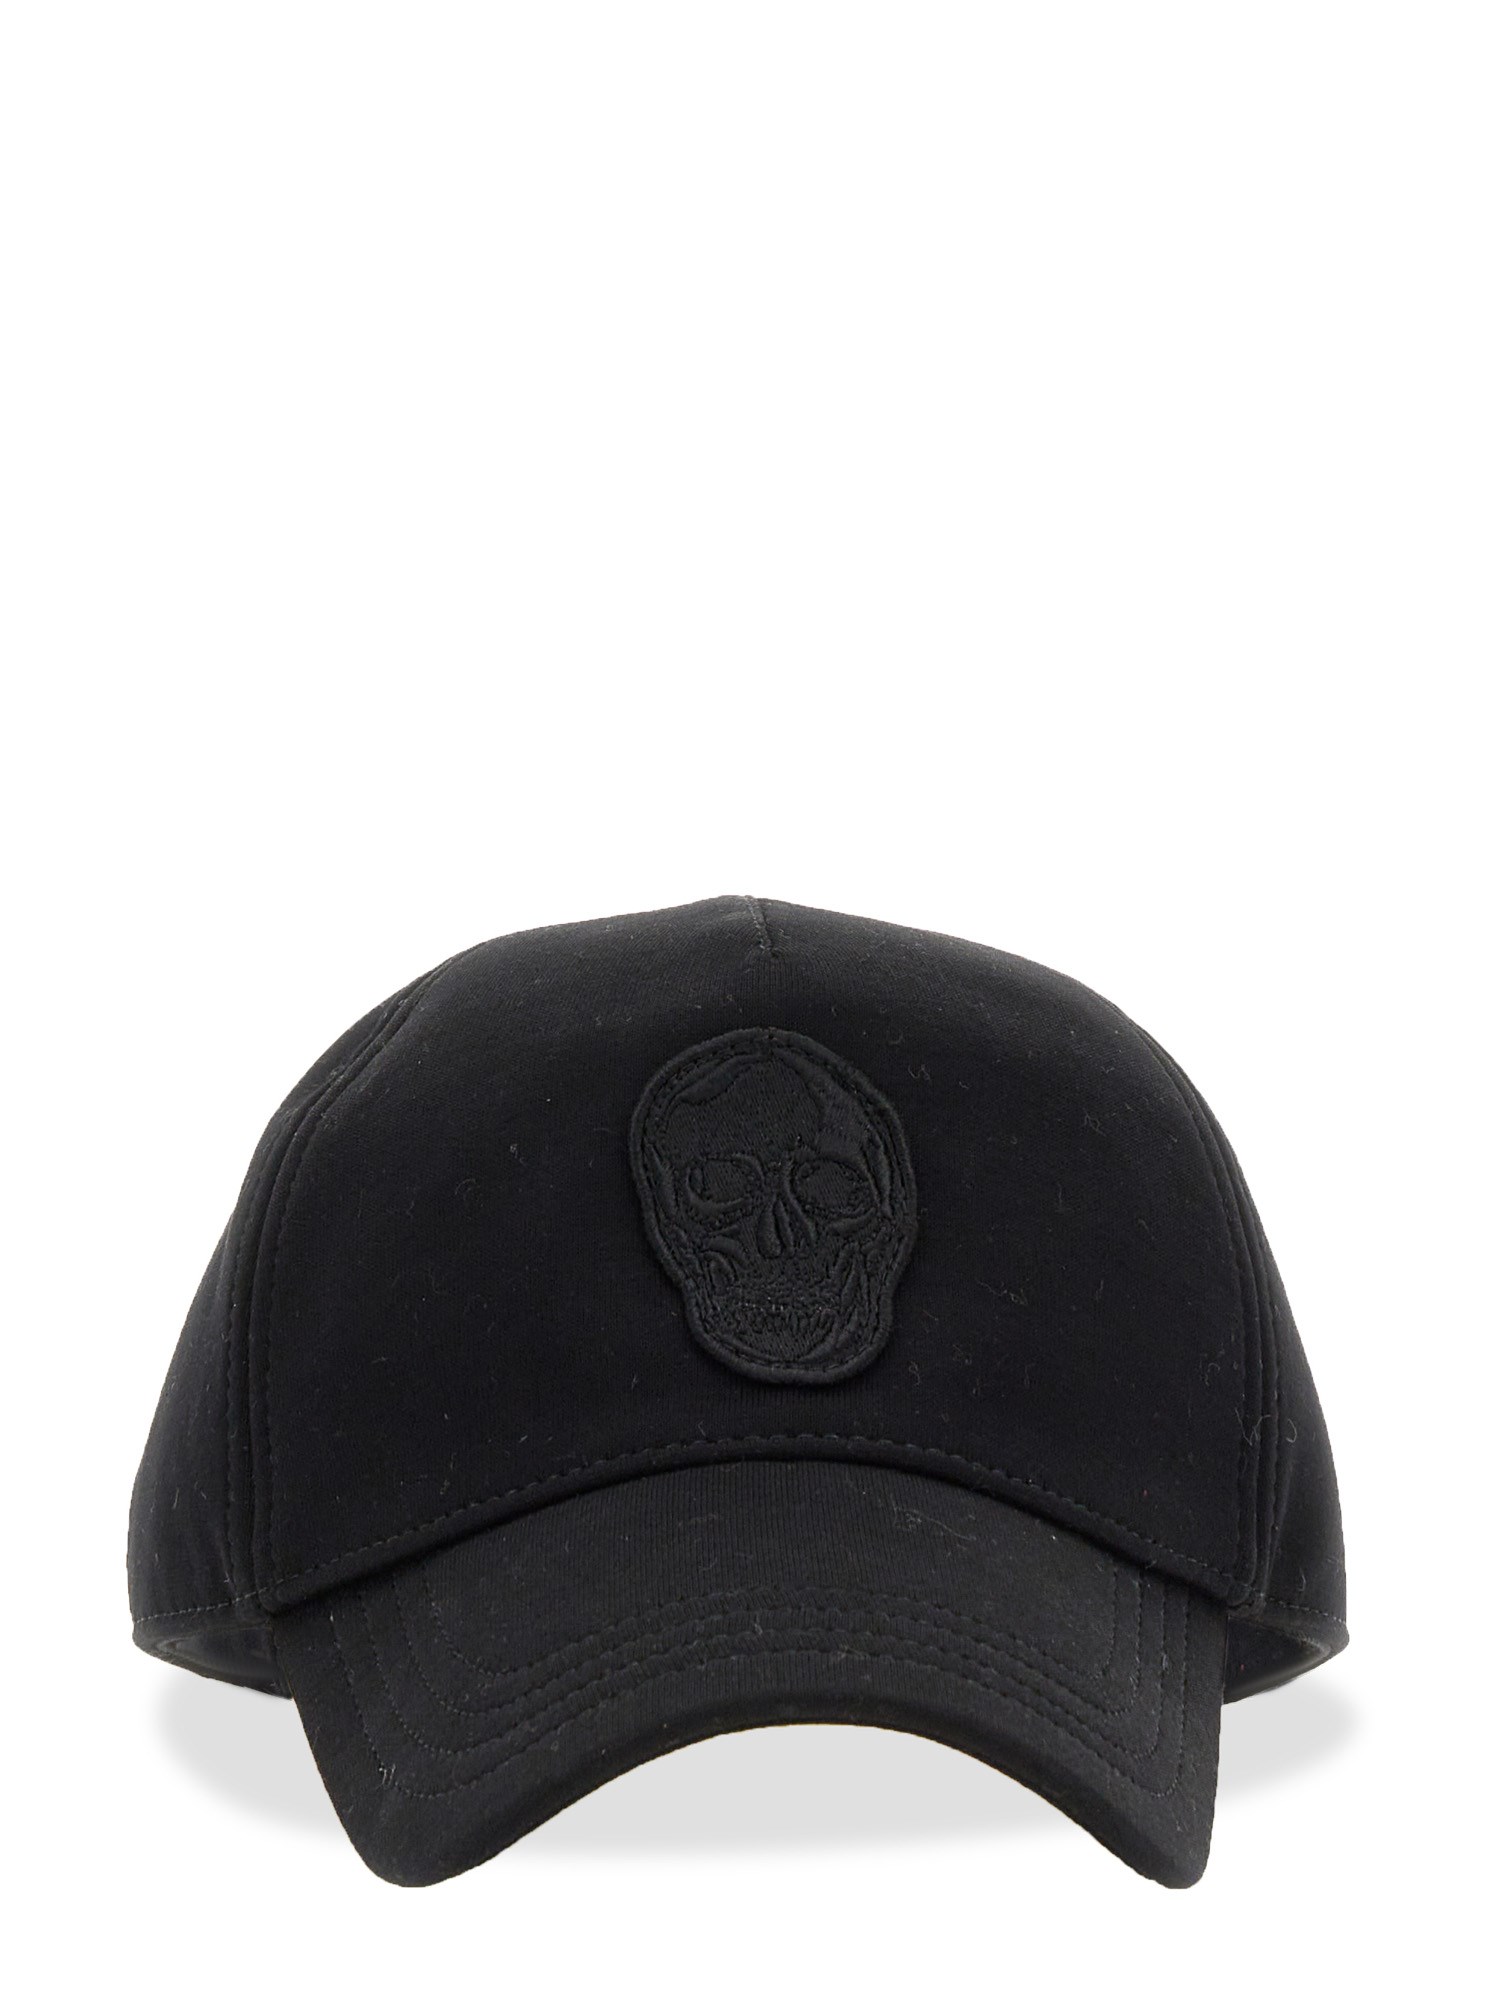 alexander mcqueen baseball hat with logo